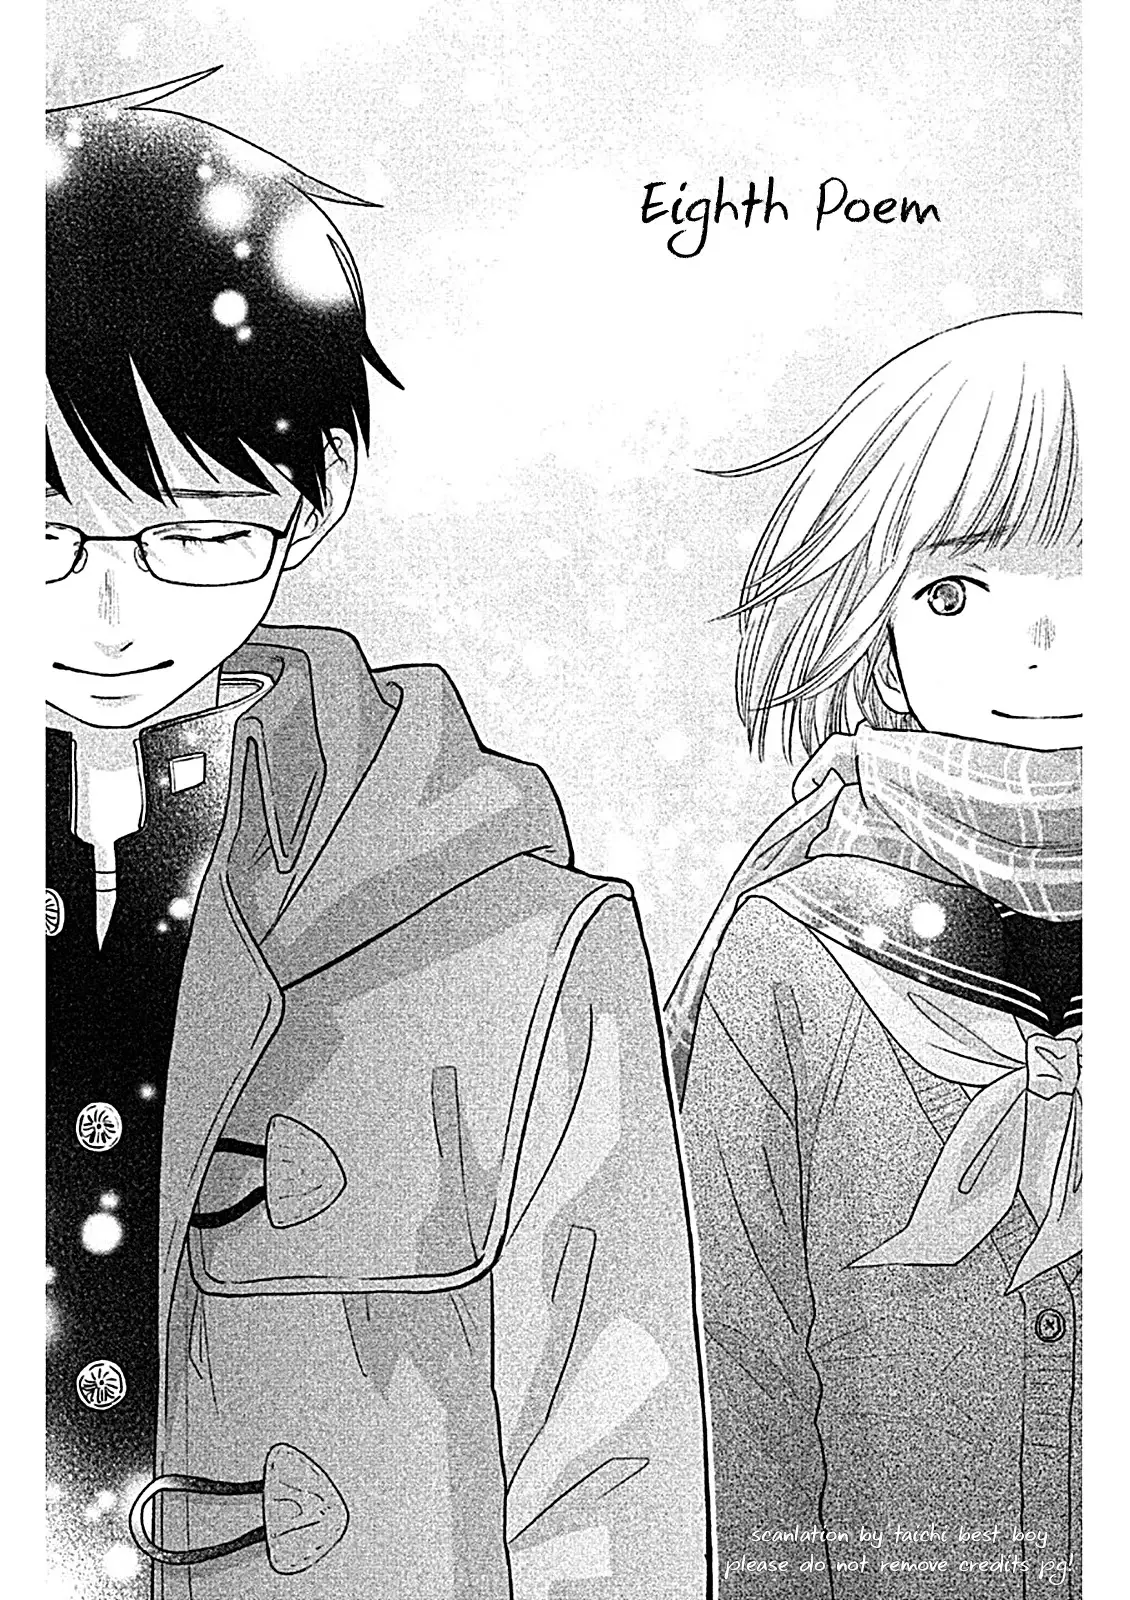 Chihayafuru: Middle School Arc - 8 page 3